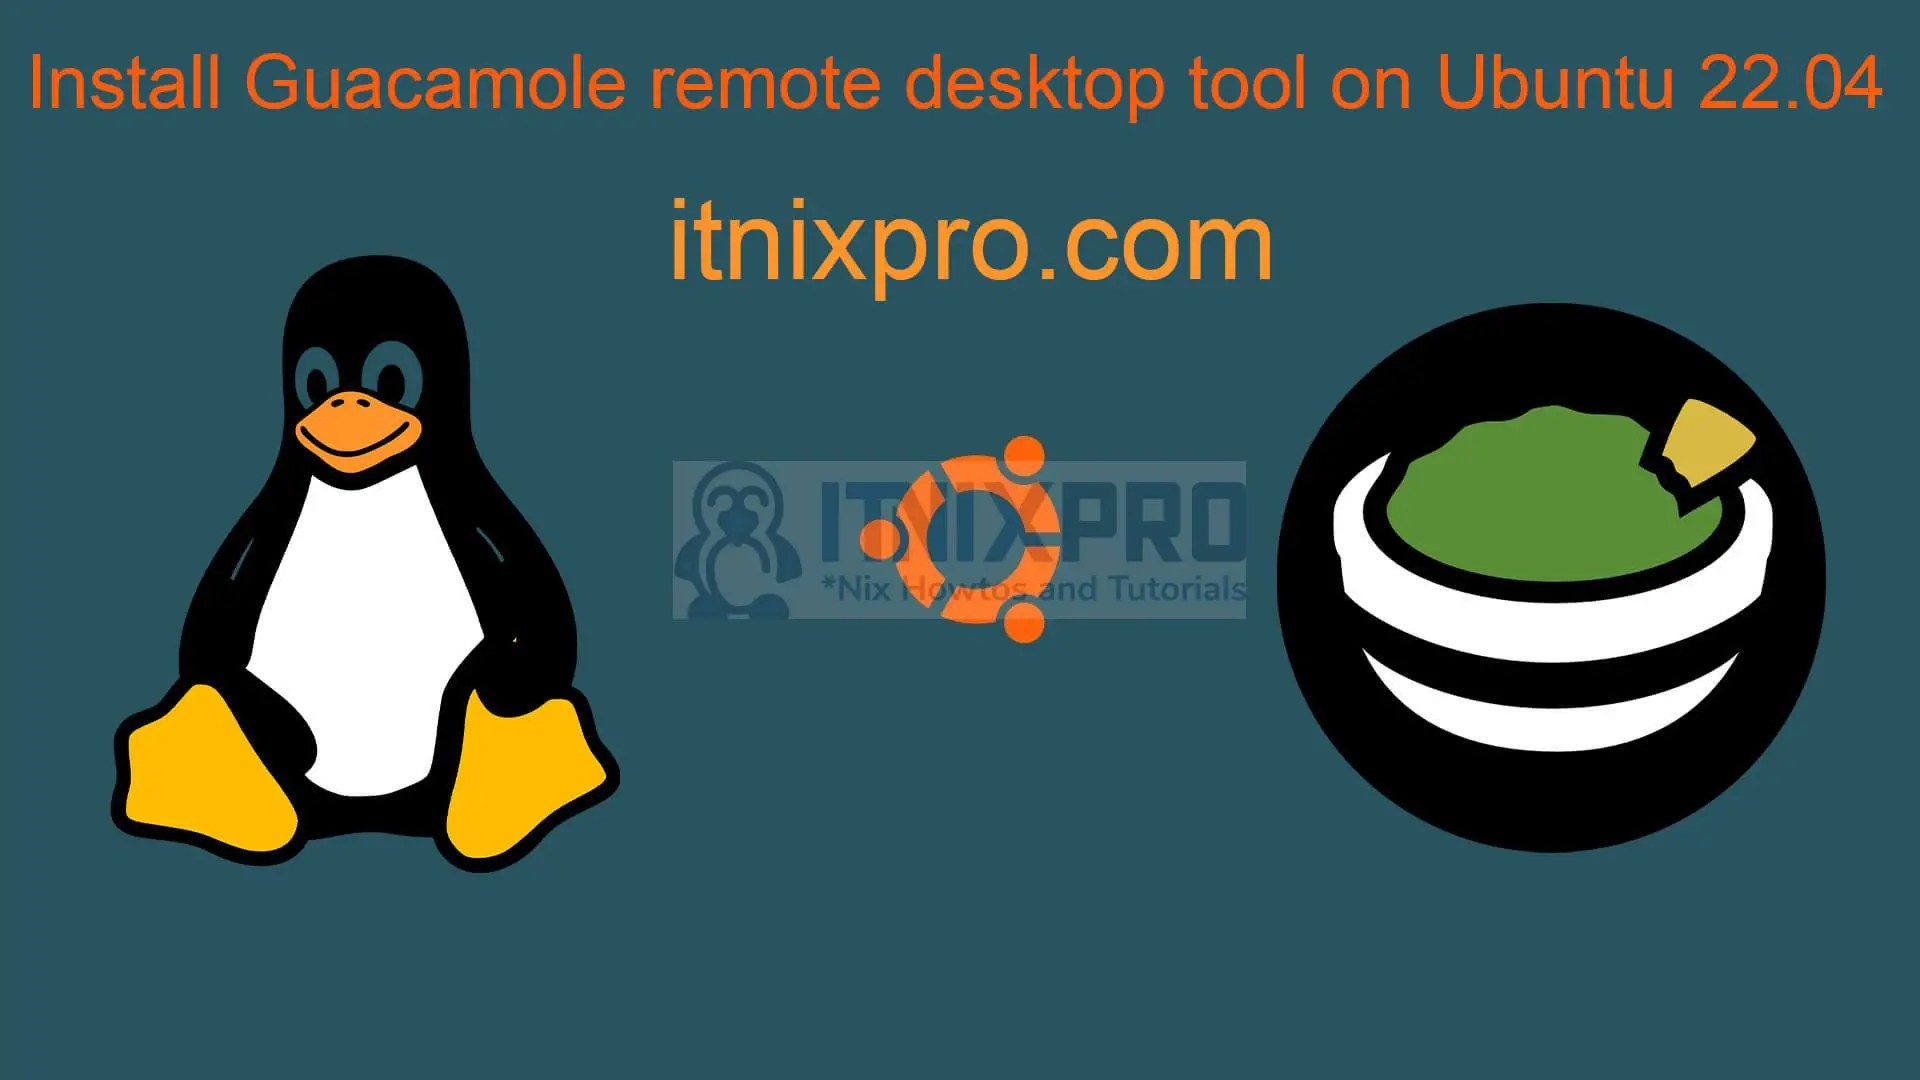 Install Guacamole remote desktop tool on Ubuntu 22.04